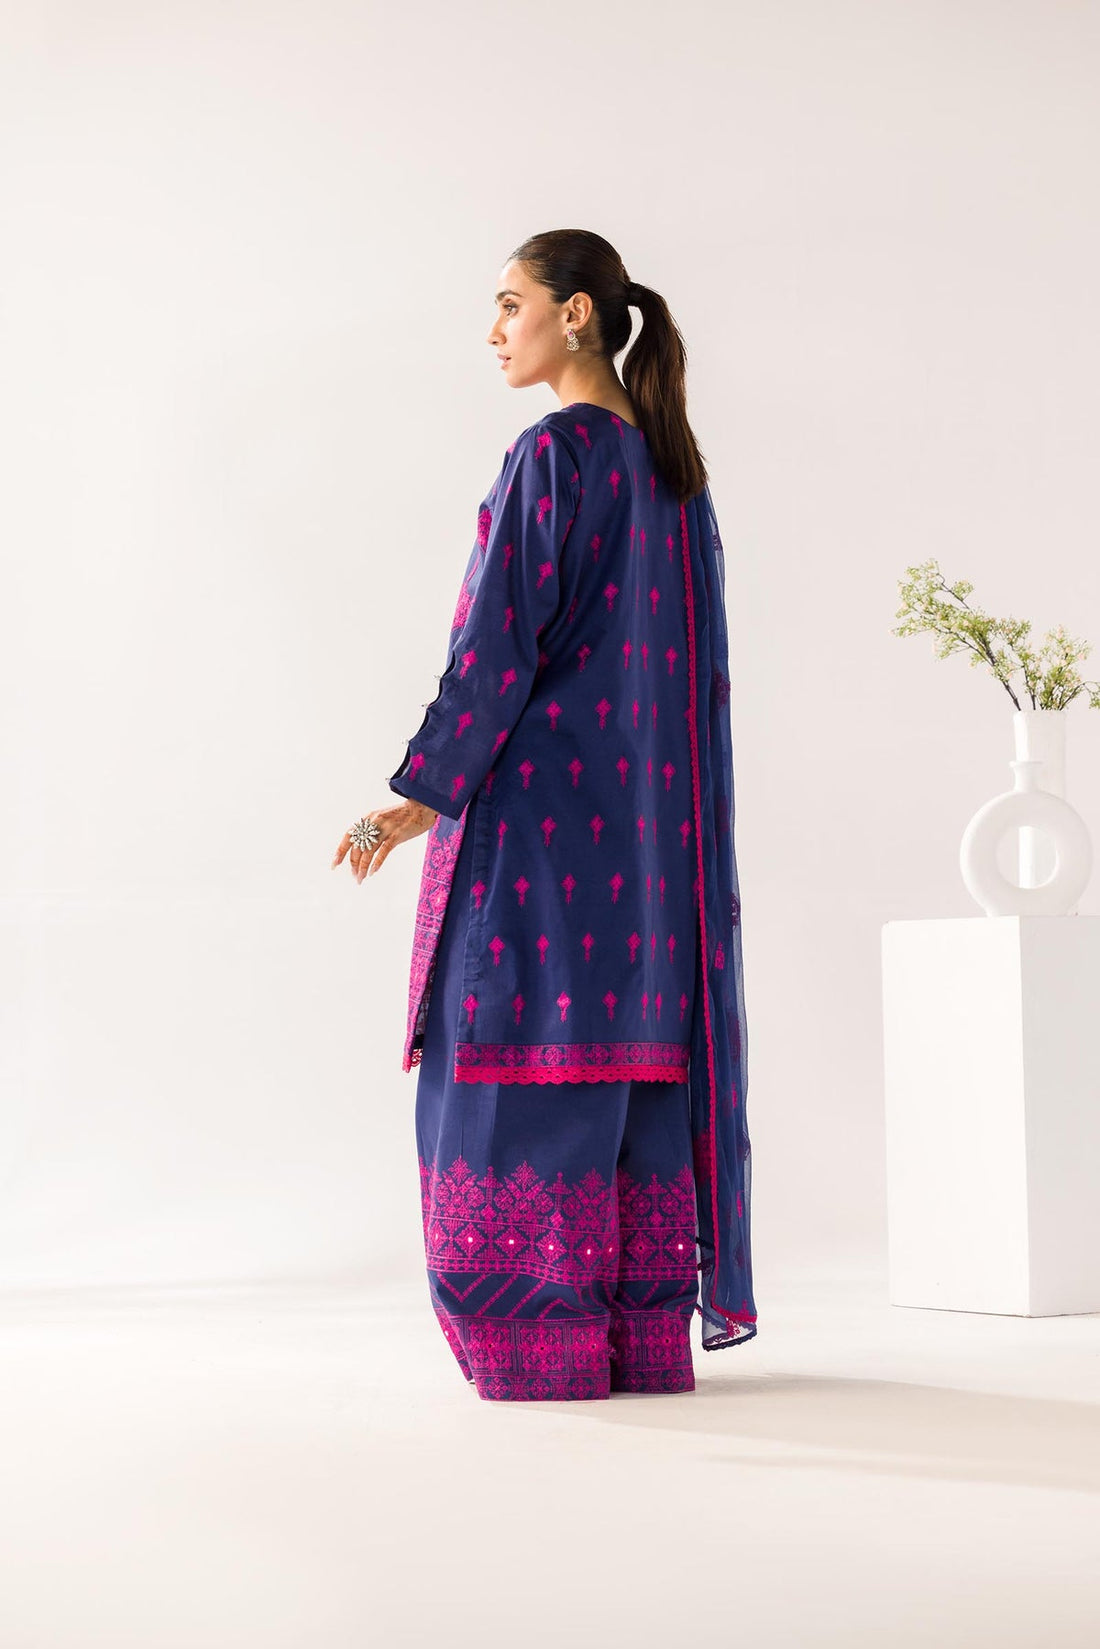 TaanaBaana | Signature Series | S3258A - Khanumjan  Pakistani Clothes and Designer Dresses in UK, USA 